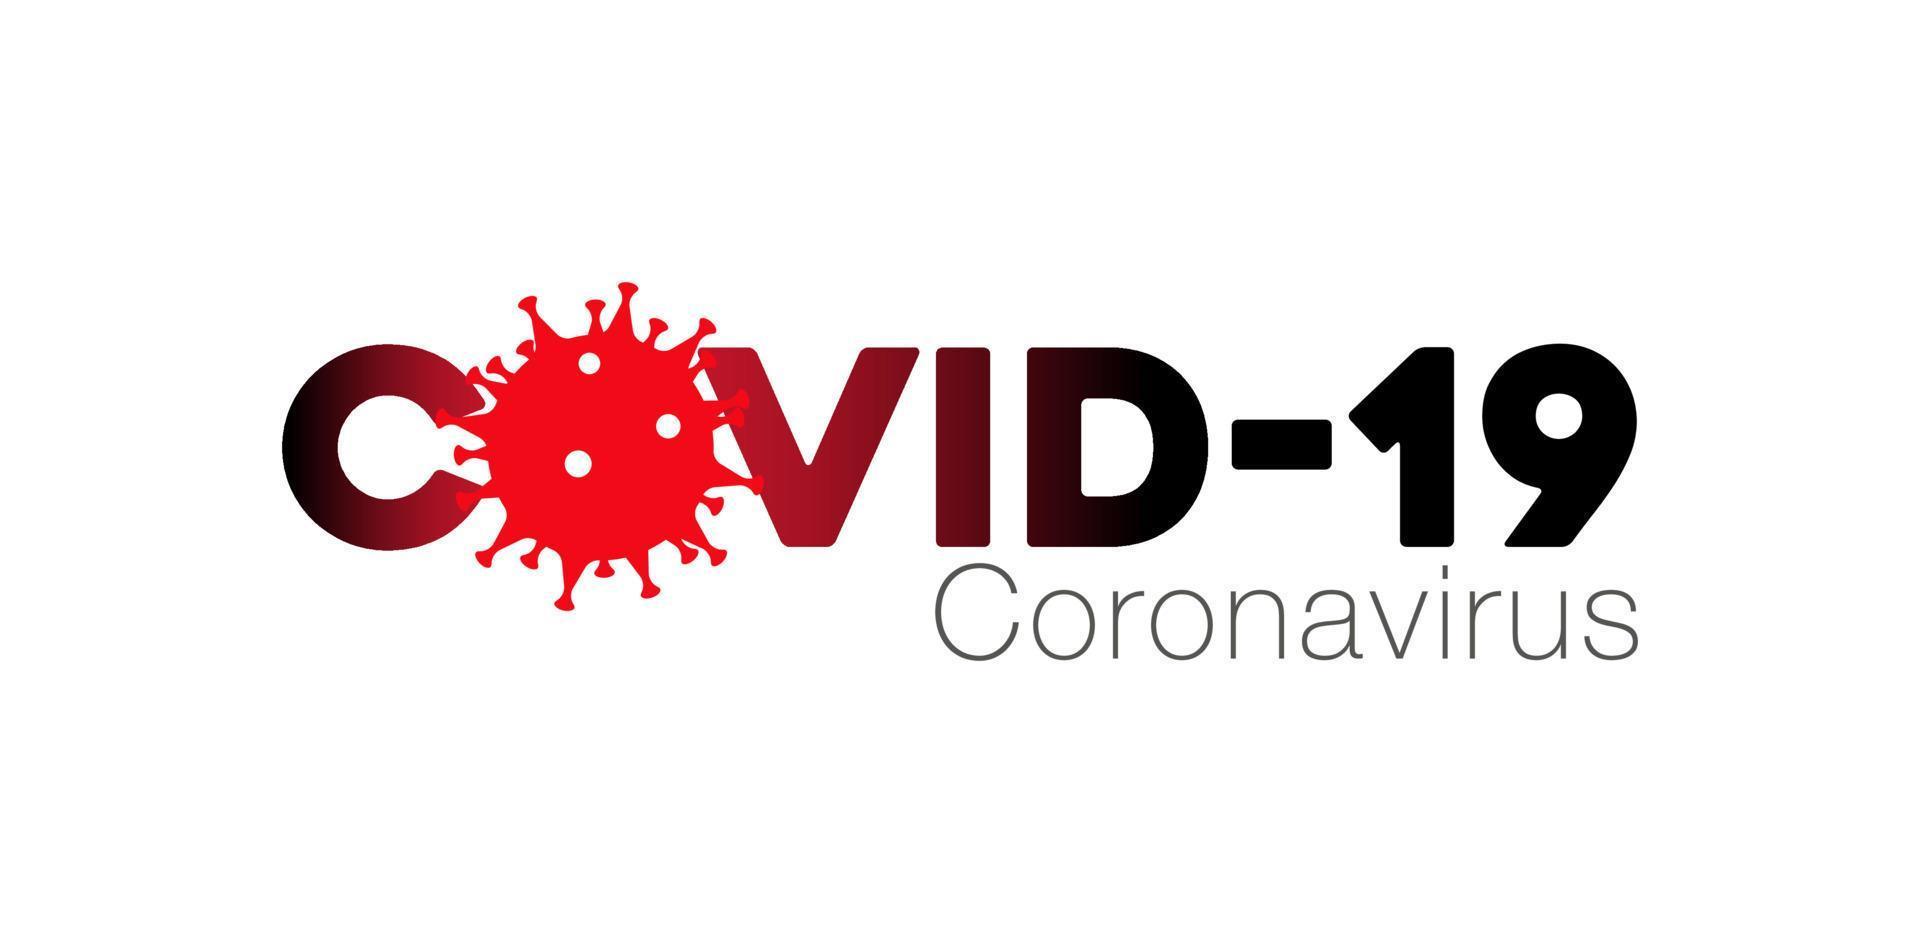 création de logo covid 19 coronavirus. coronavirus covid 19 vecteur